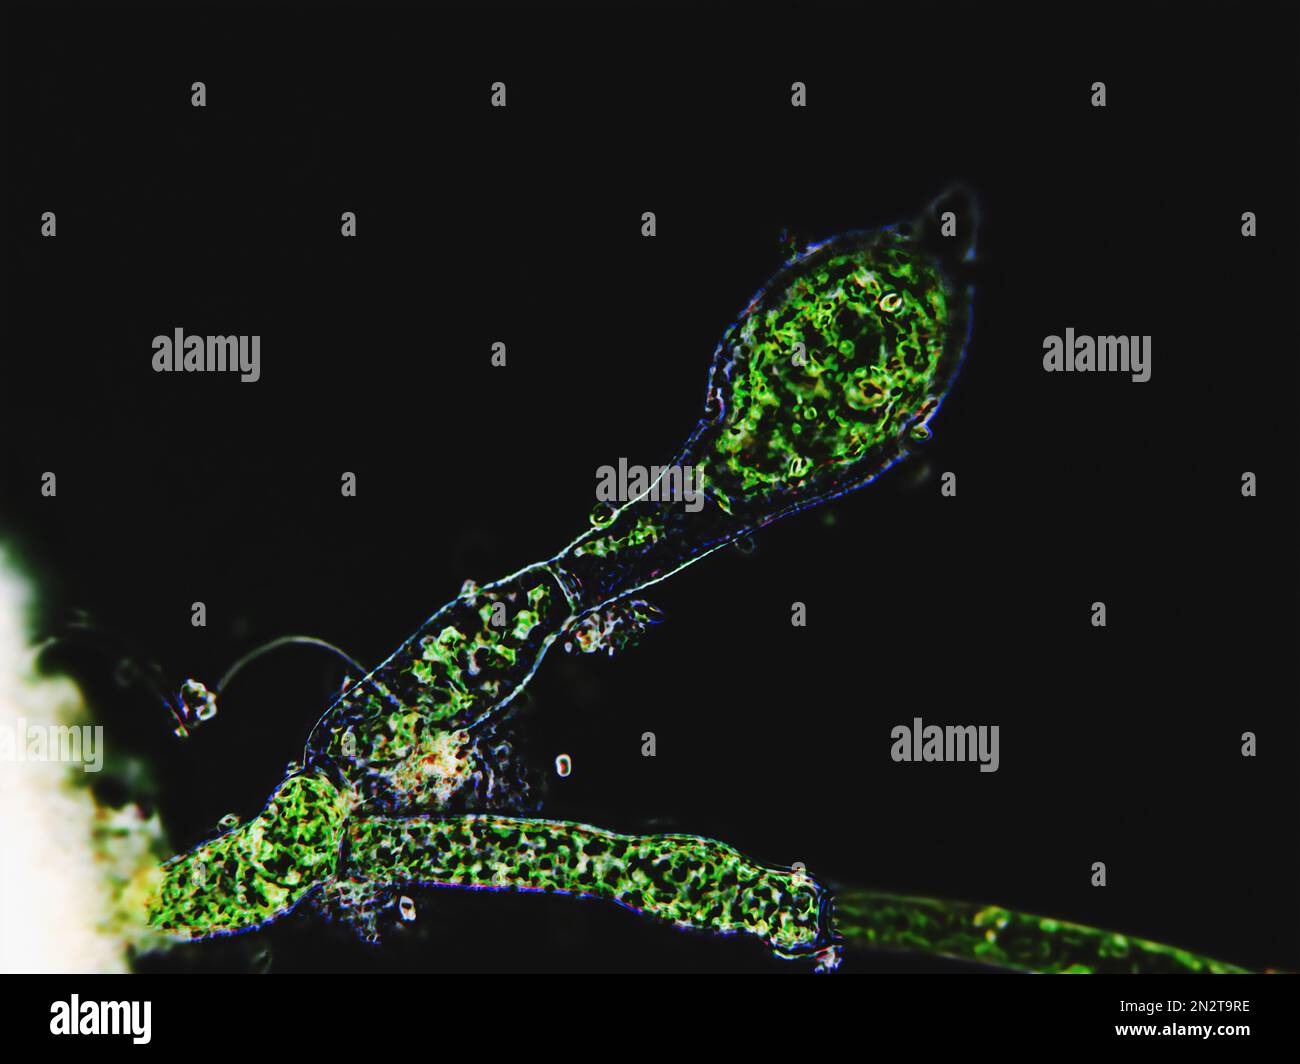 Cladophora sp. algae under microscopic view, dark background - Chlorophyta, Green algae Stock Photo